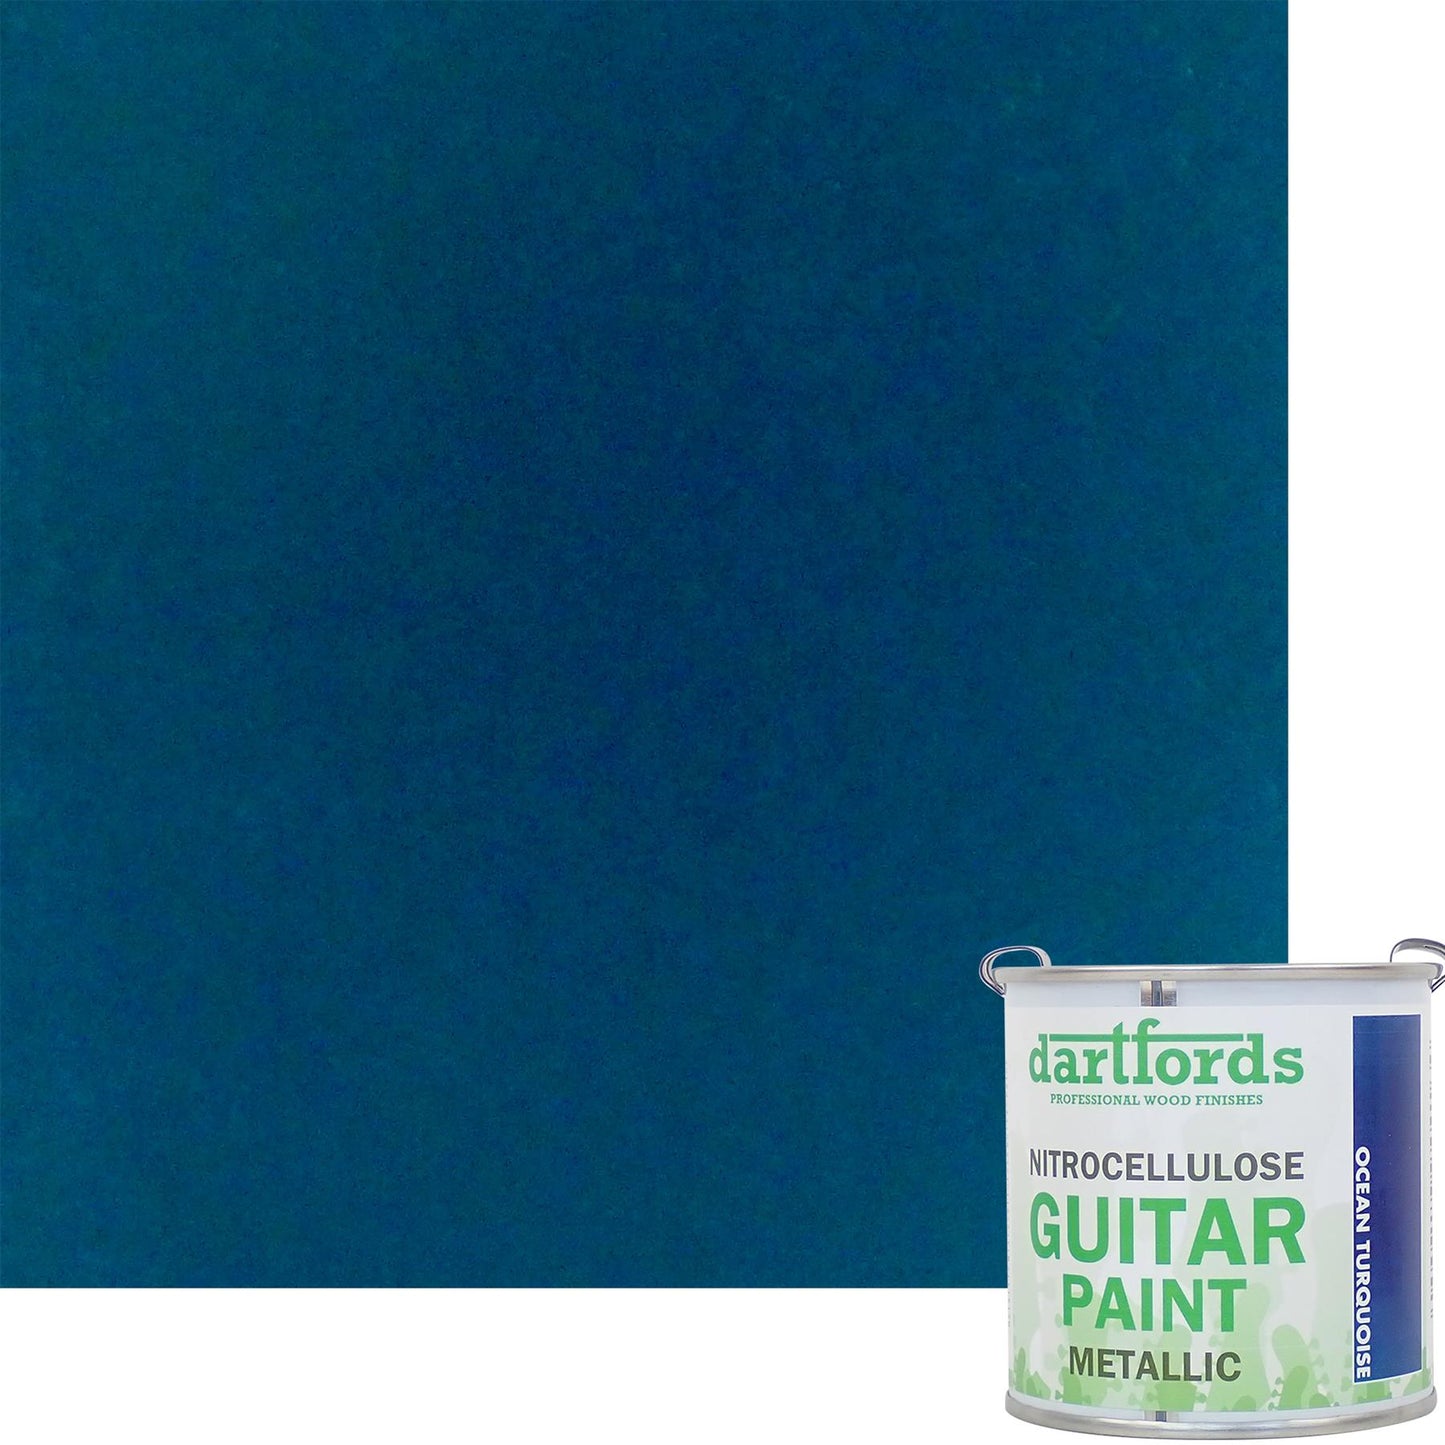 dartfords Ocean Turquoise Metallic Nitrocellulose Guitar Paint - 230ml Tin